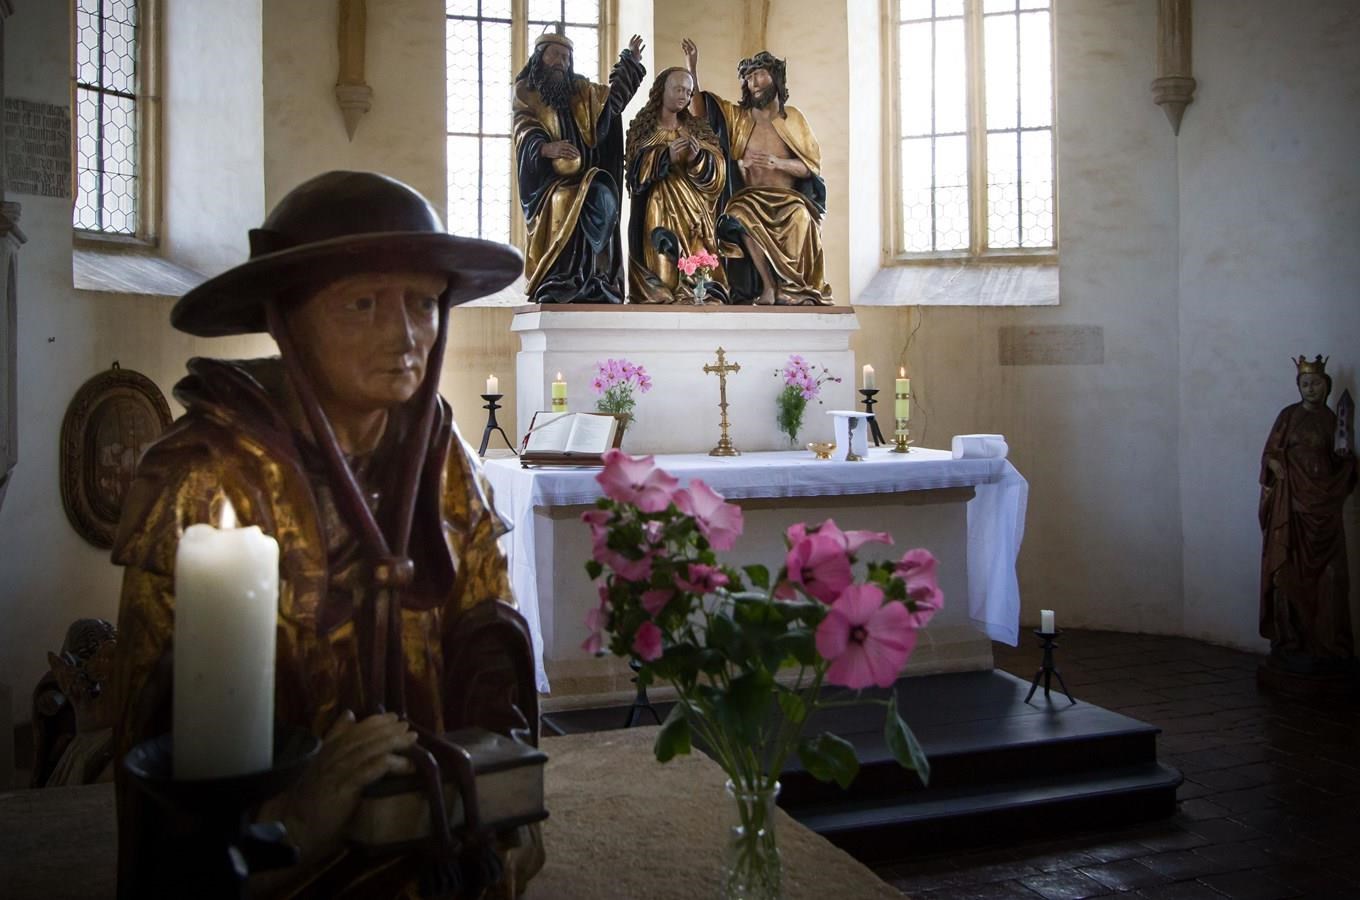 Bohoslužba ve švihovské hradní kapli ke svátku Navštívení Panny Marie